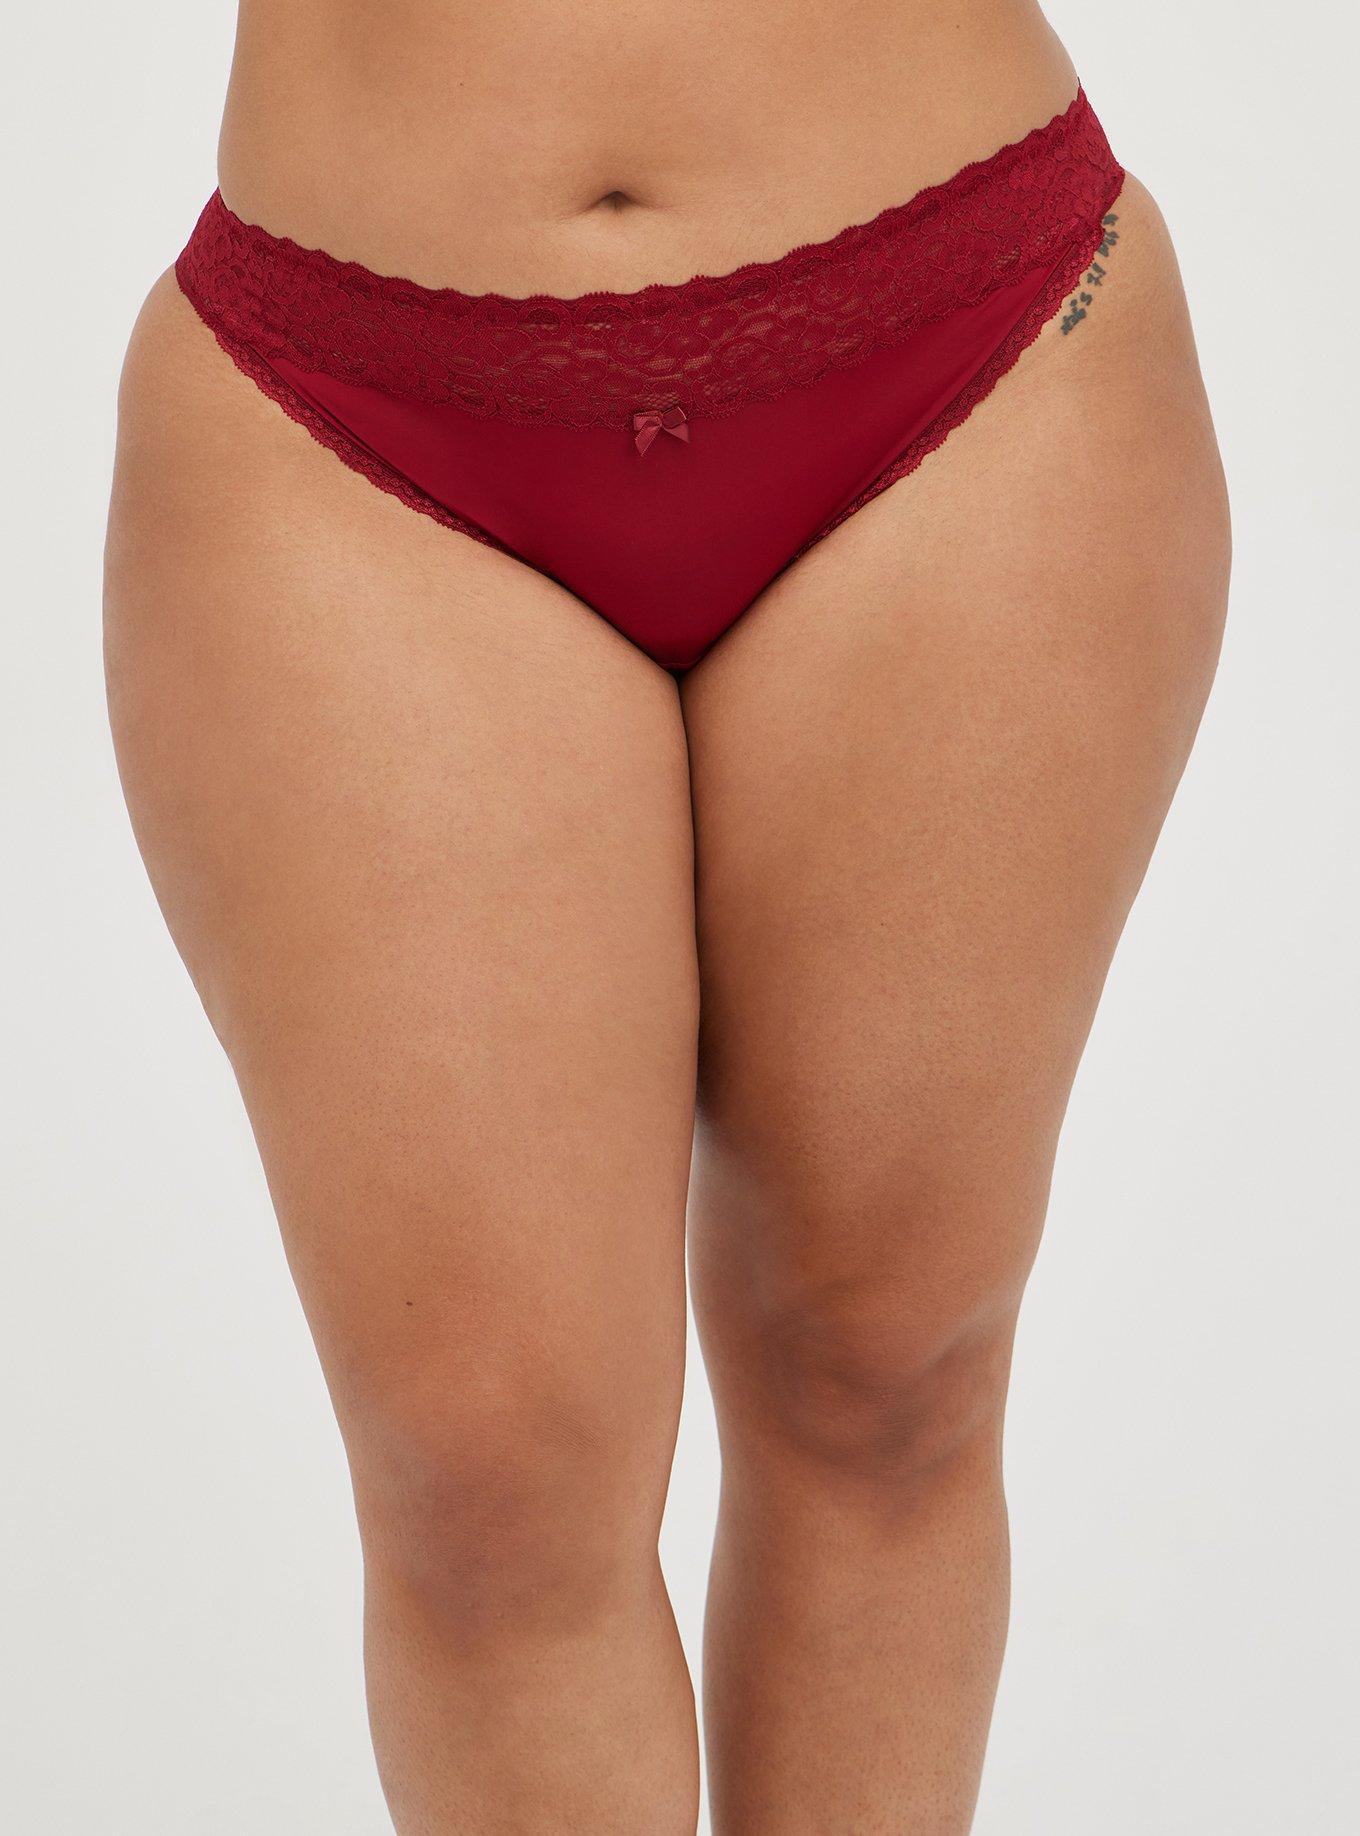 Torrid Bikini Skin Panties Black Lace Blur Rose 💜Floral Plus Underwear NWT  4 4x